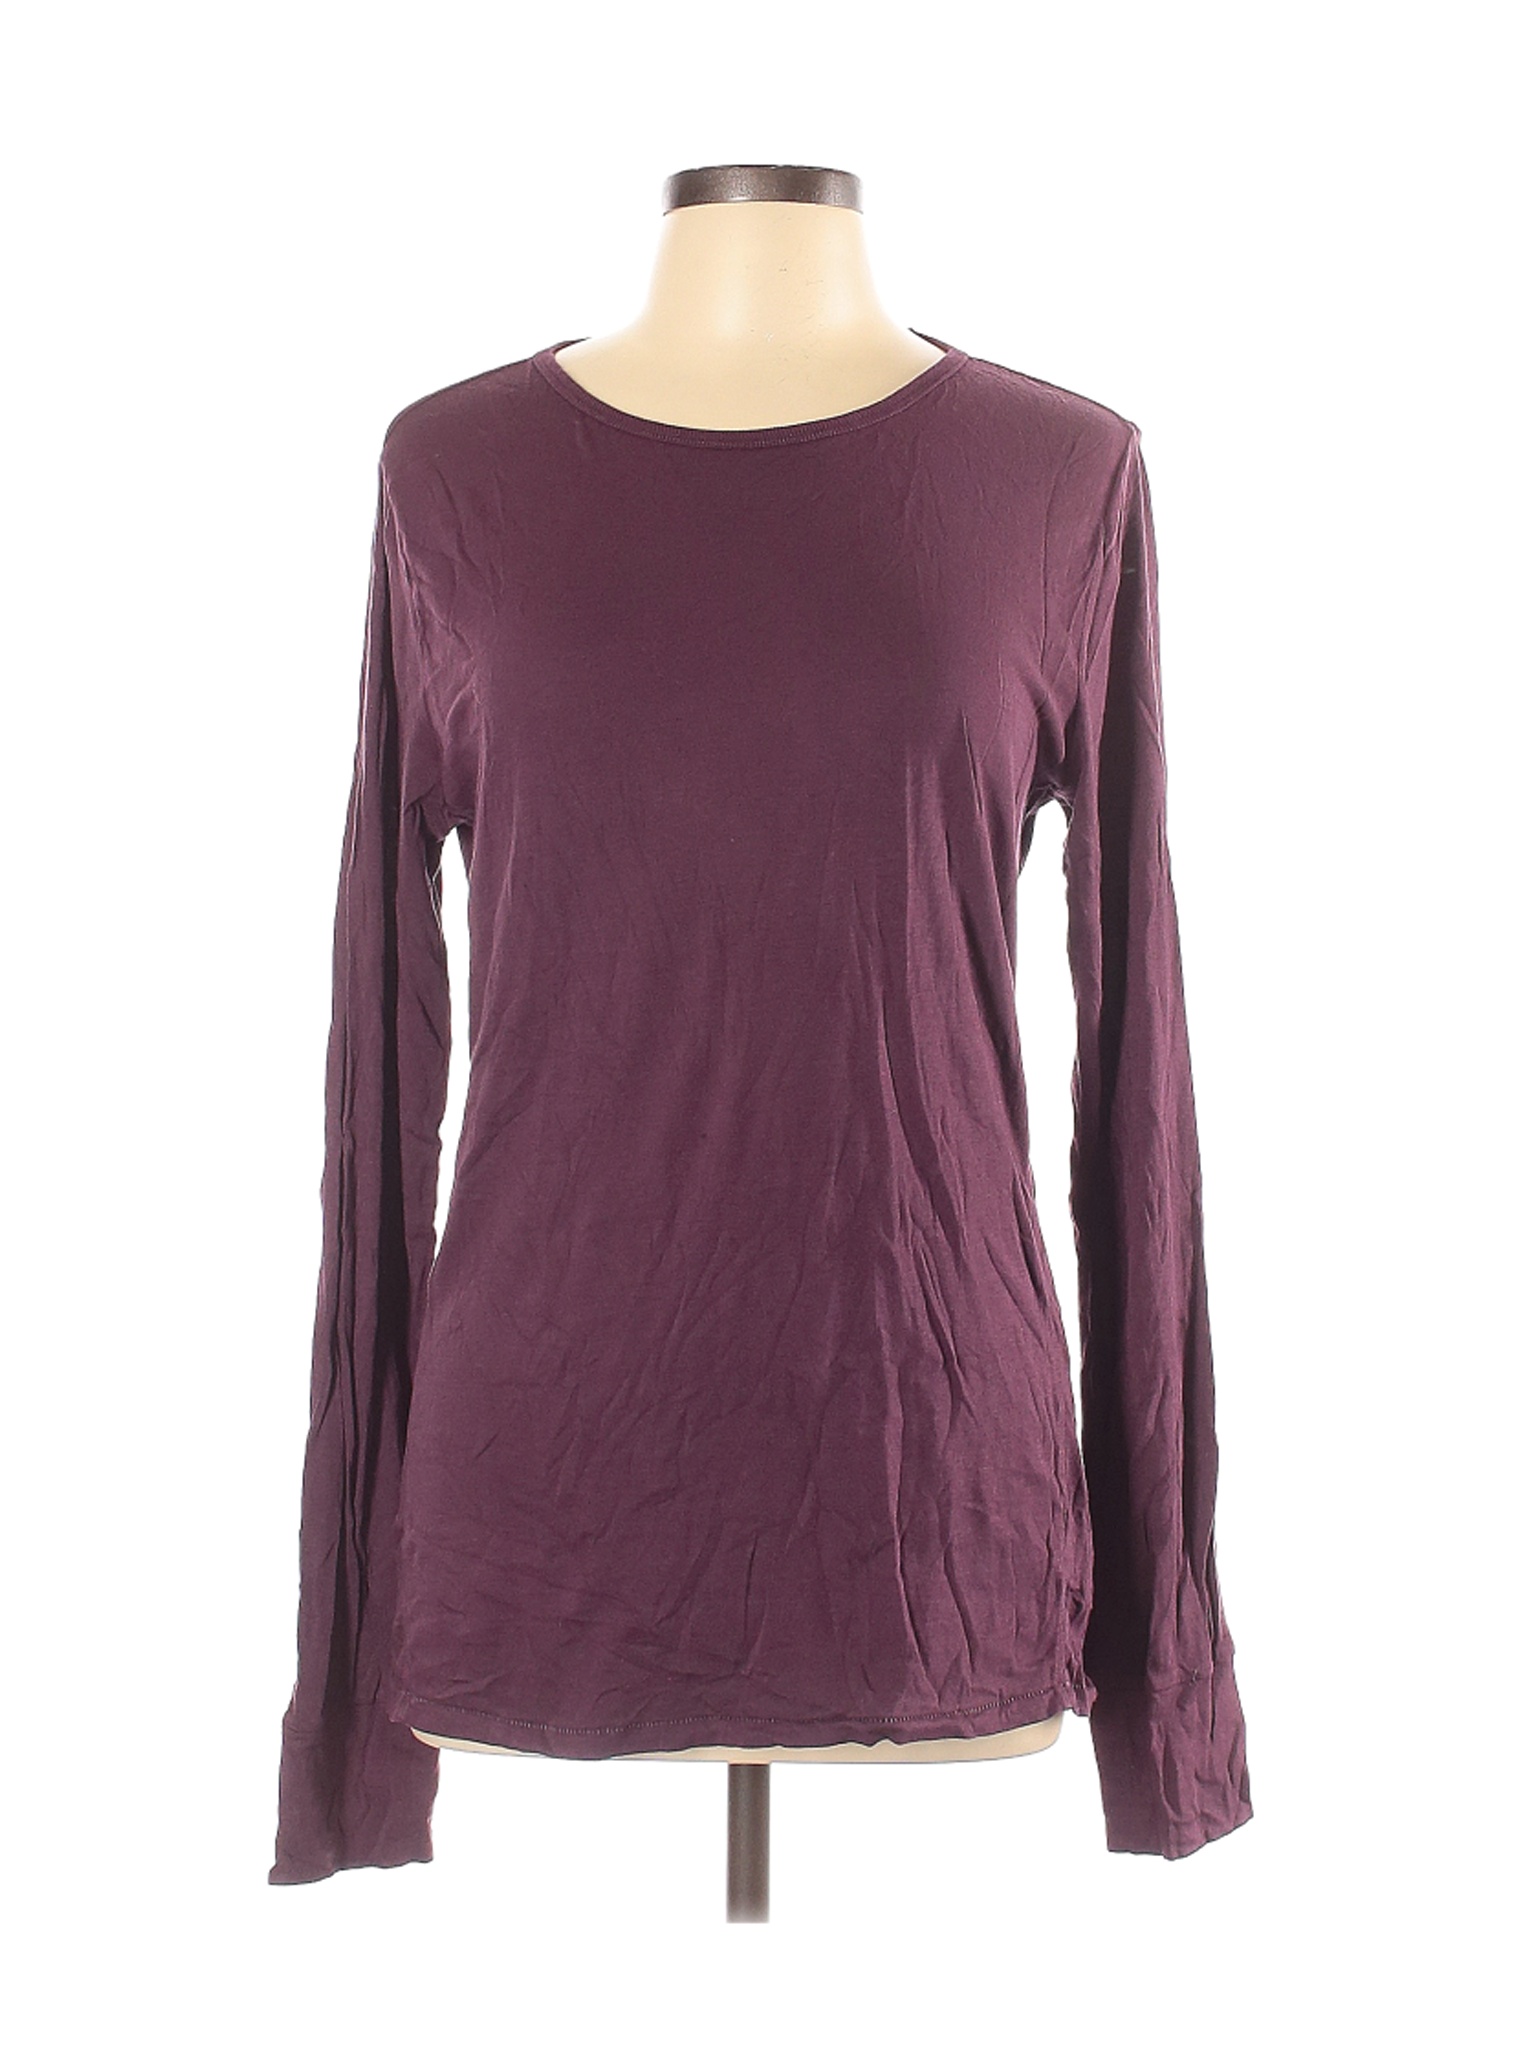 Gap Women Purple Long Sleeve T-Shirt L Tall | eBay